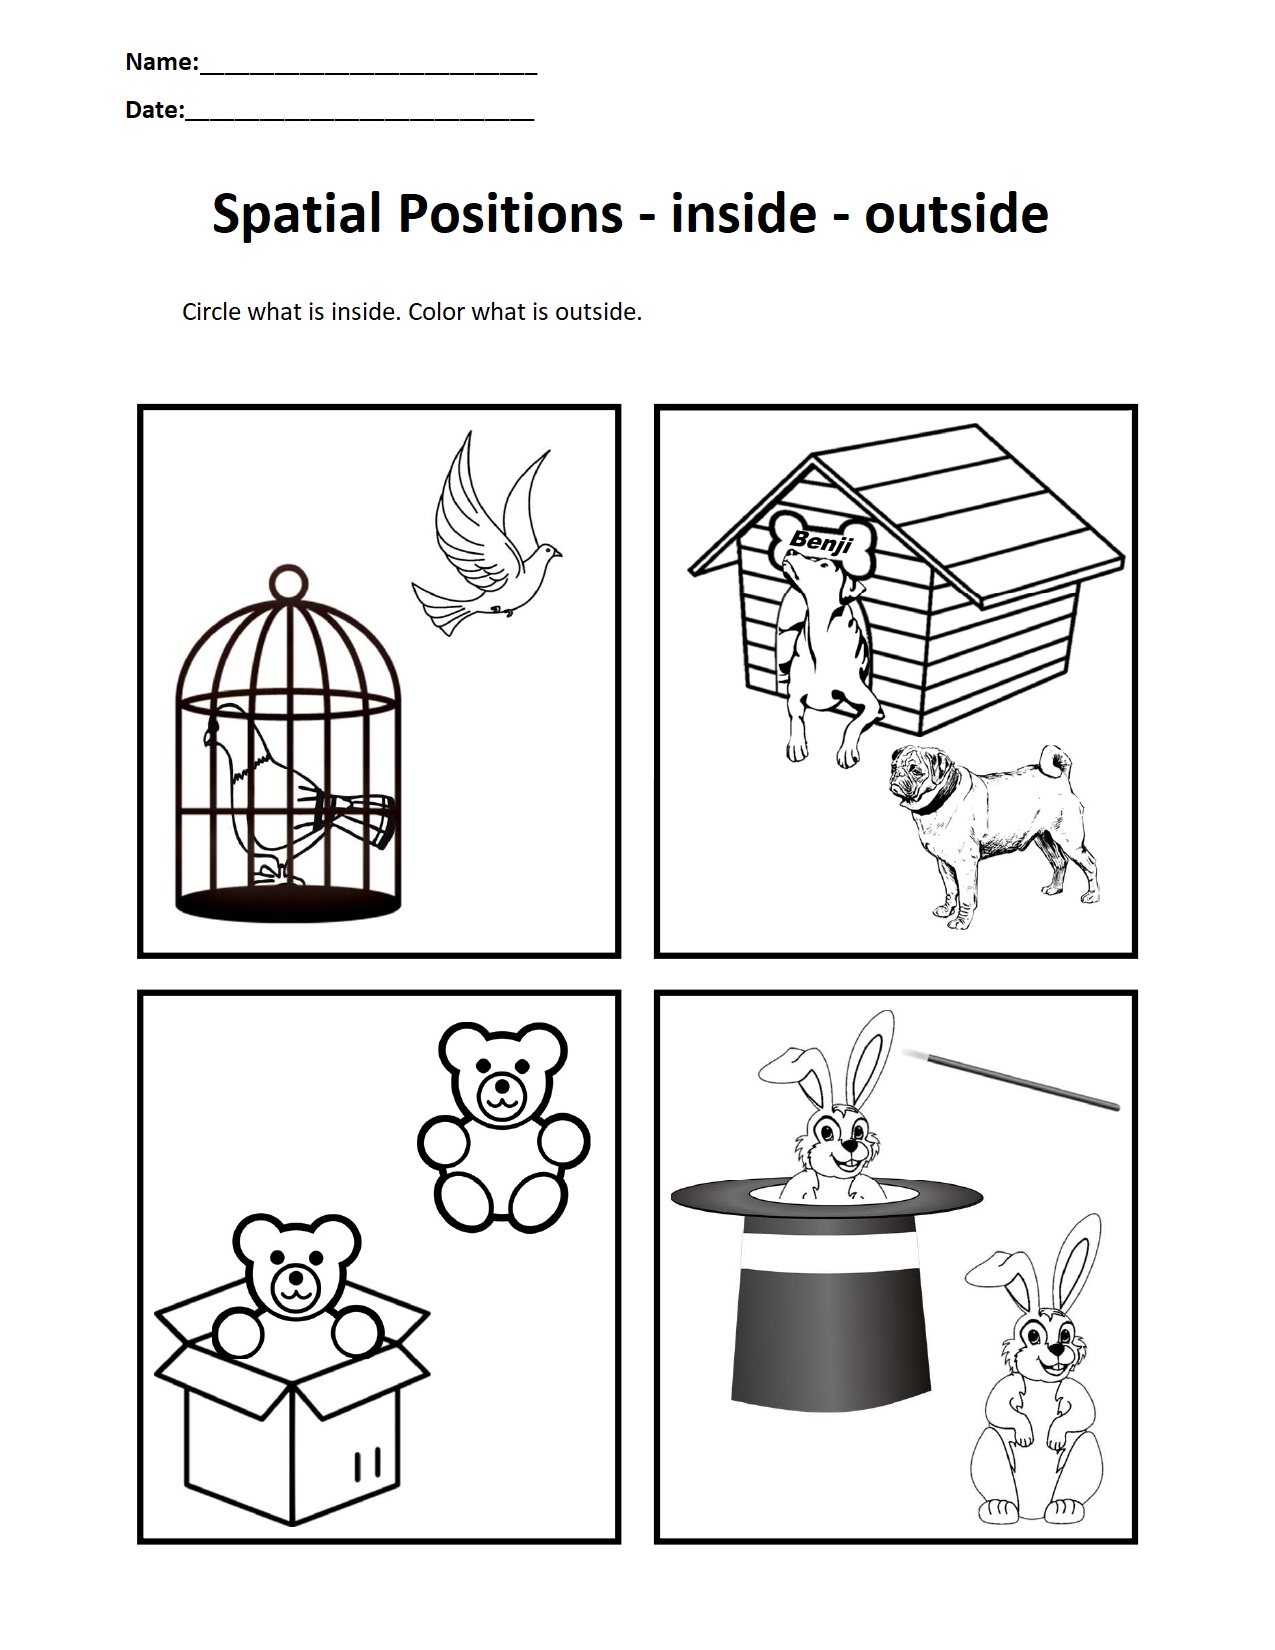 Spatial Positions - inside - outside.jpg